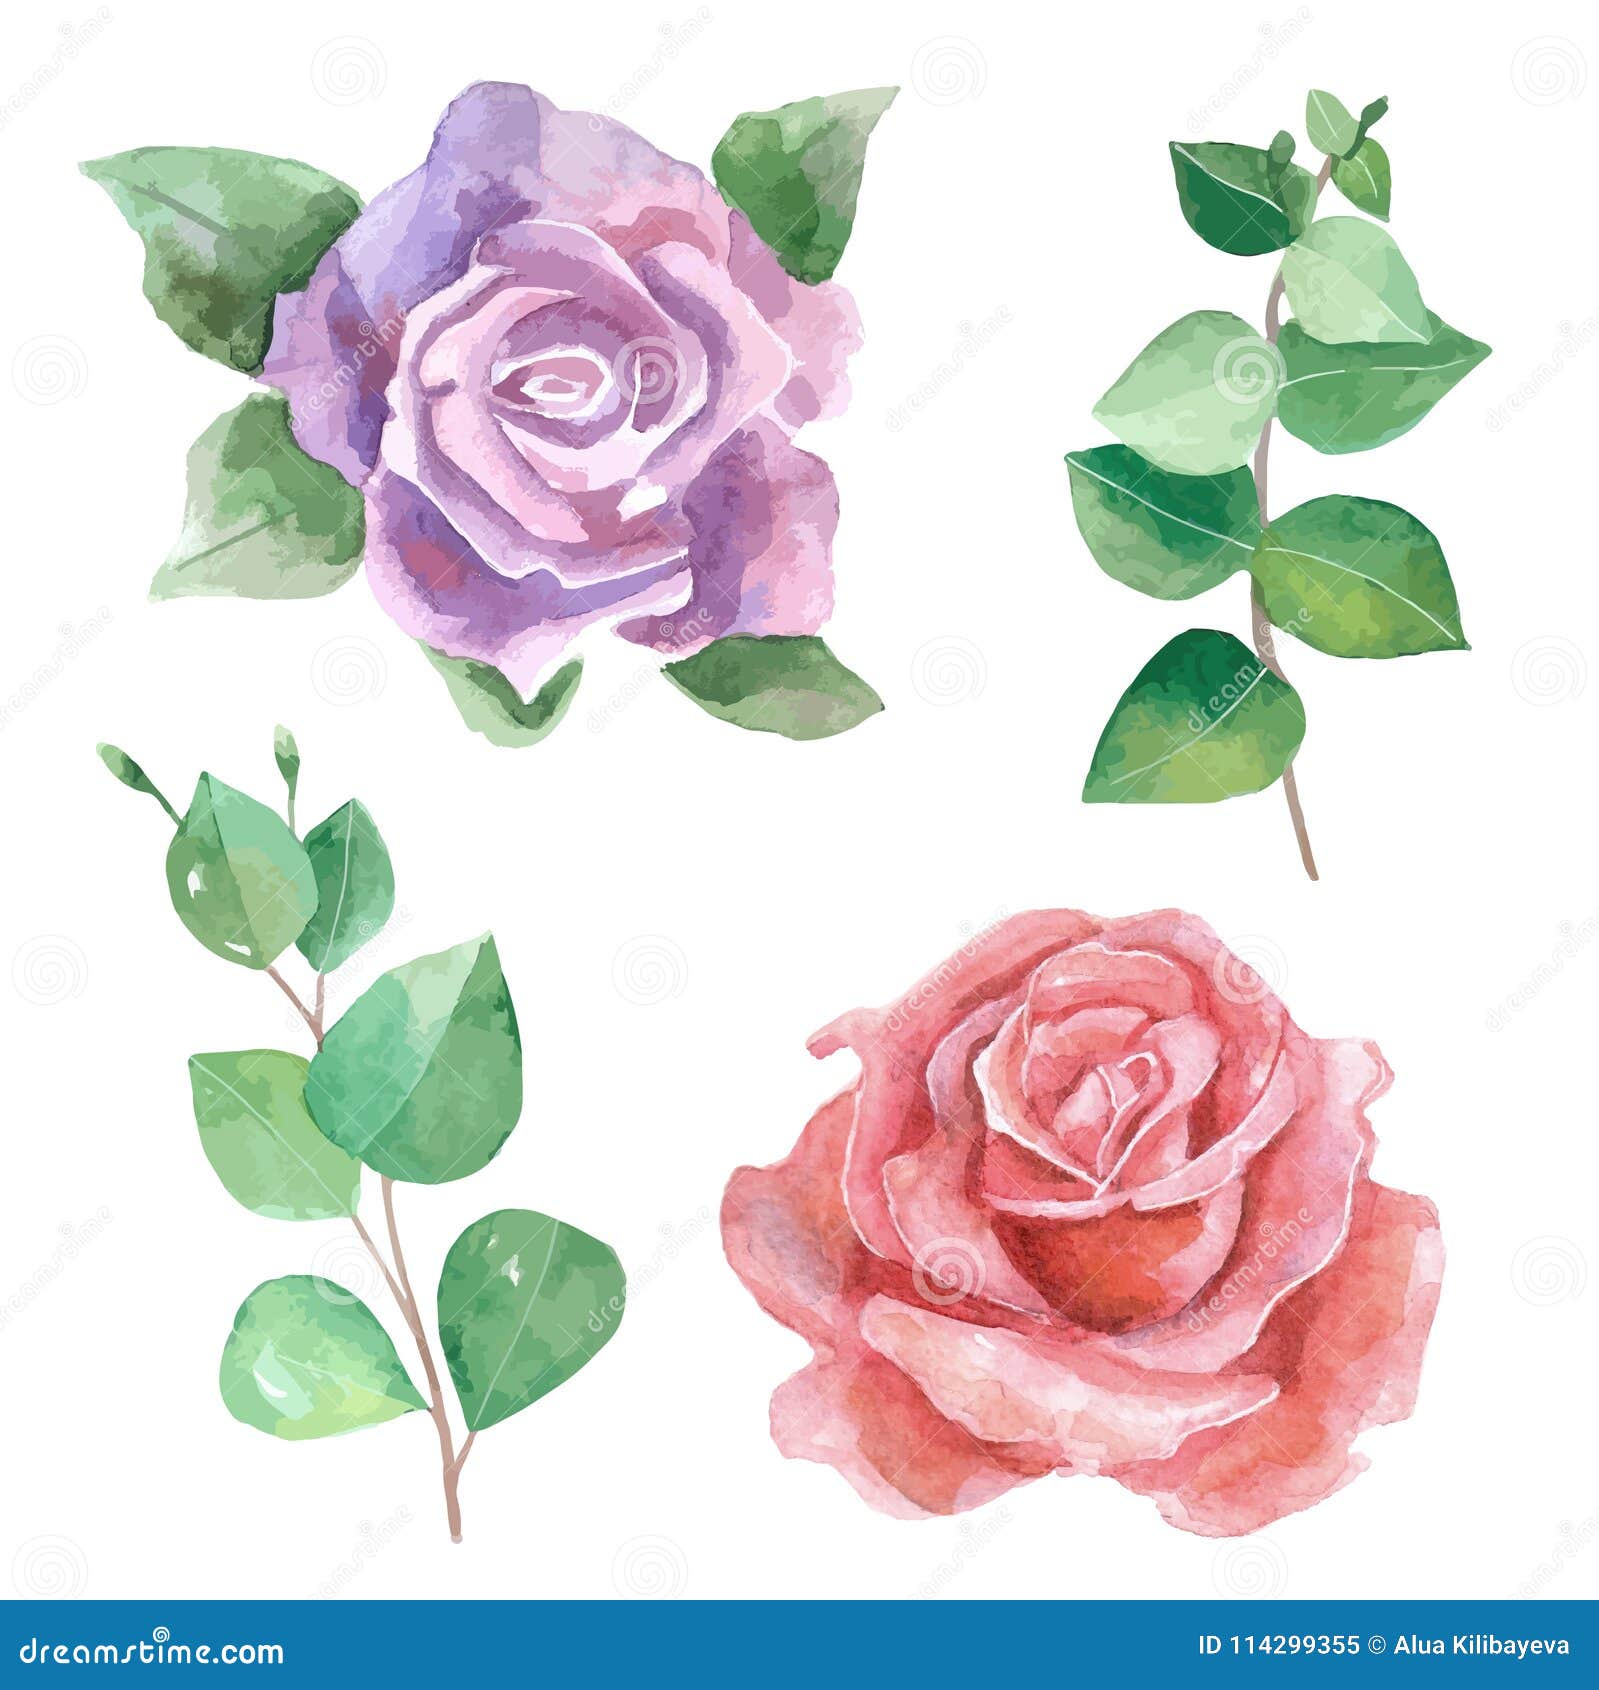 Roses watercolour vectors stock vector. Illustration of blossom - 114299355